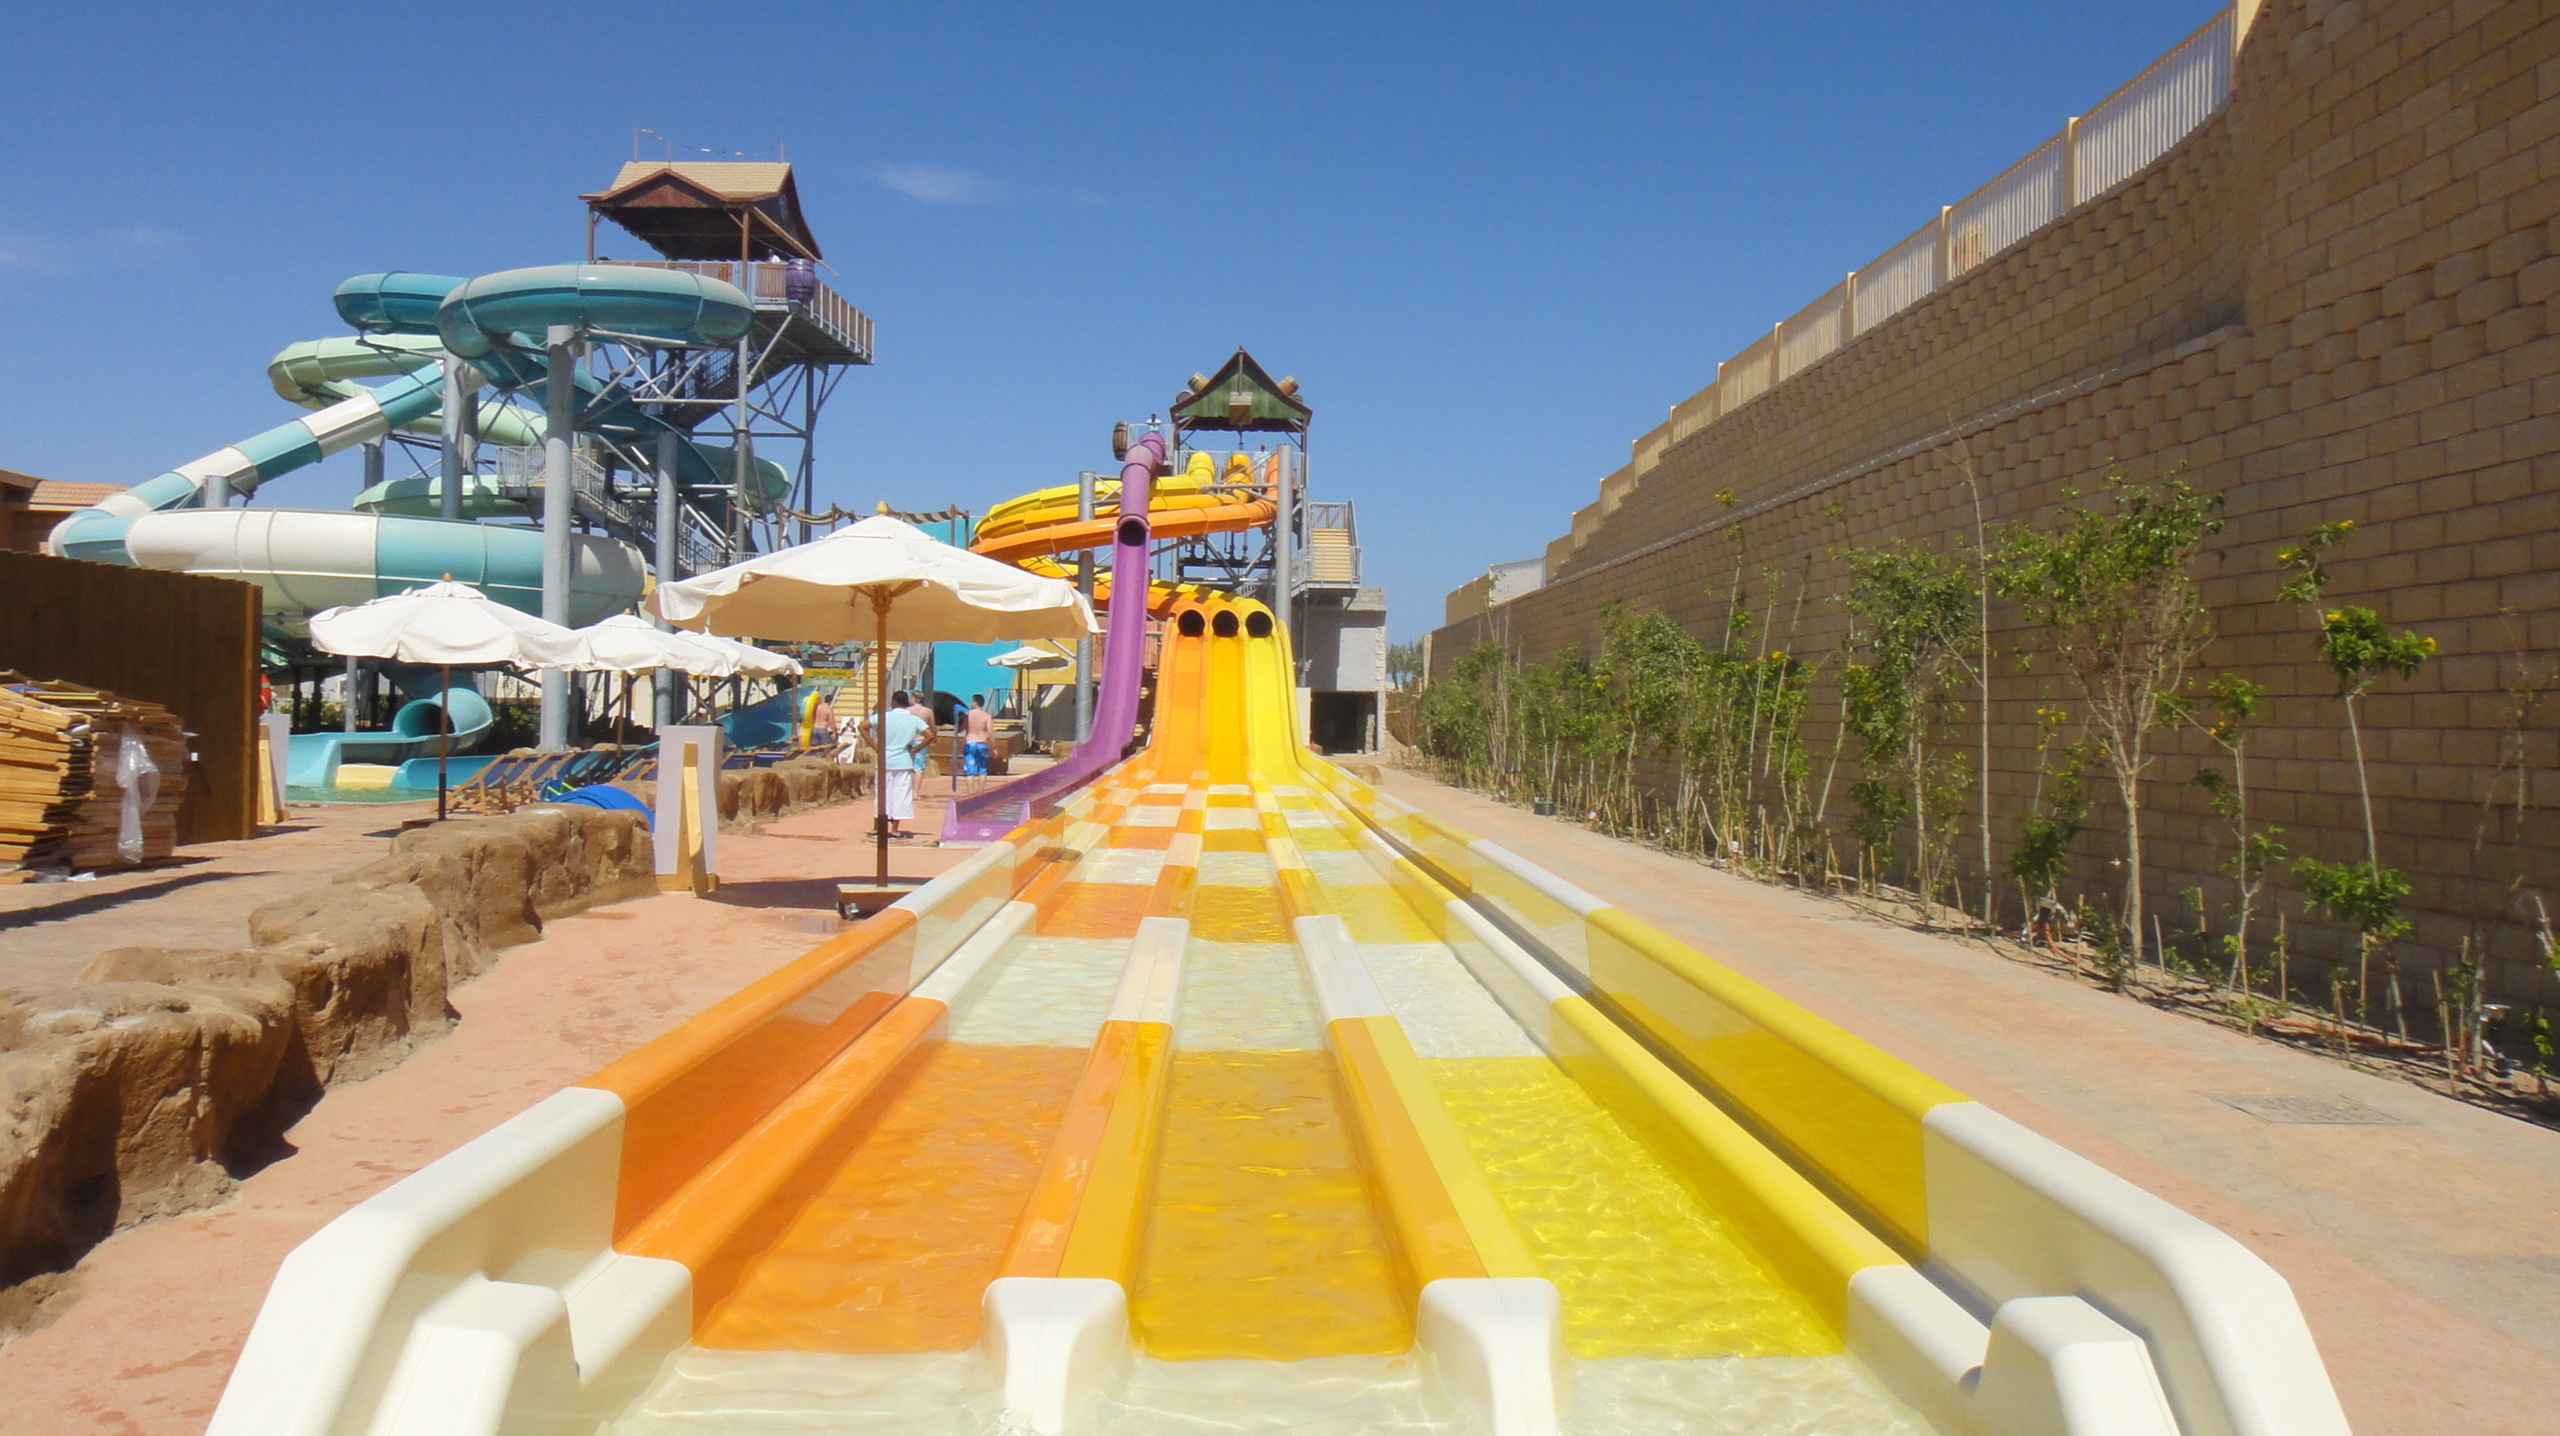 Slide Tower, Coral Sea Holiday Resort and Aqua Park, Sharm El Sheikh, Egypt